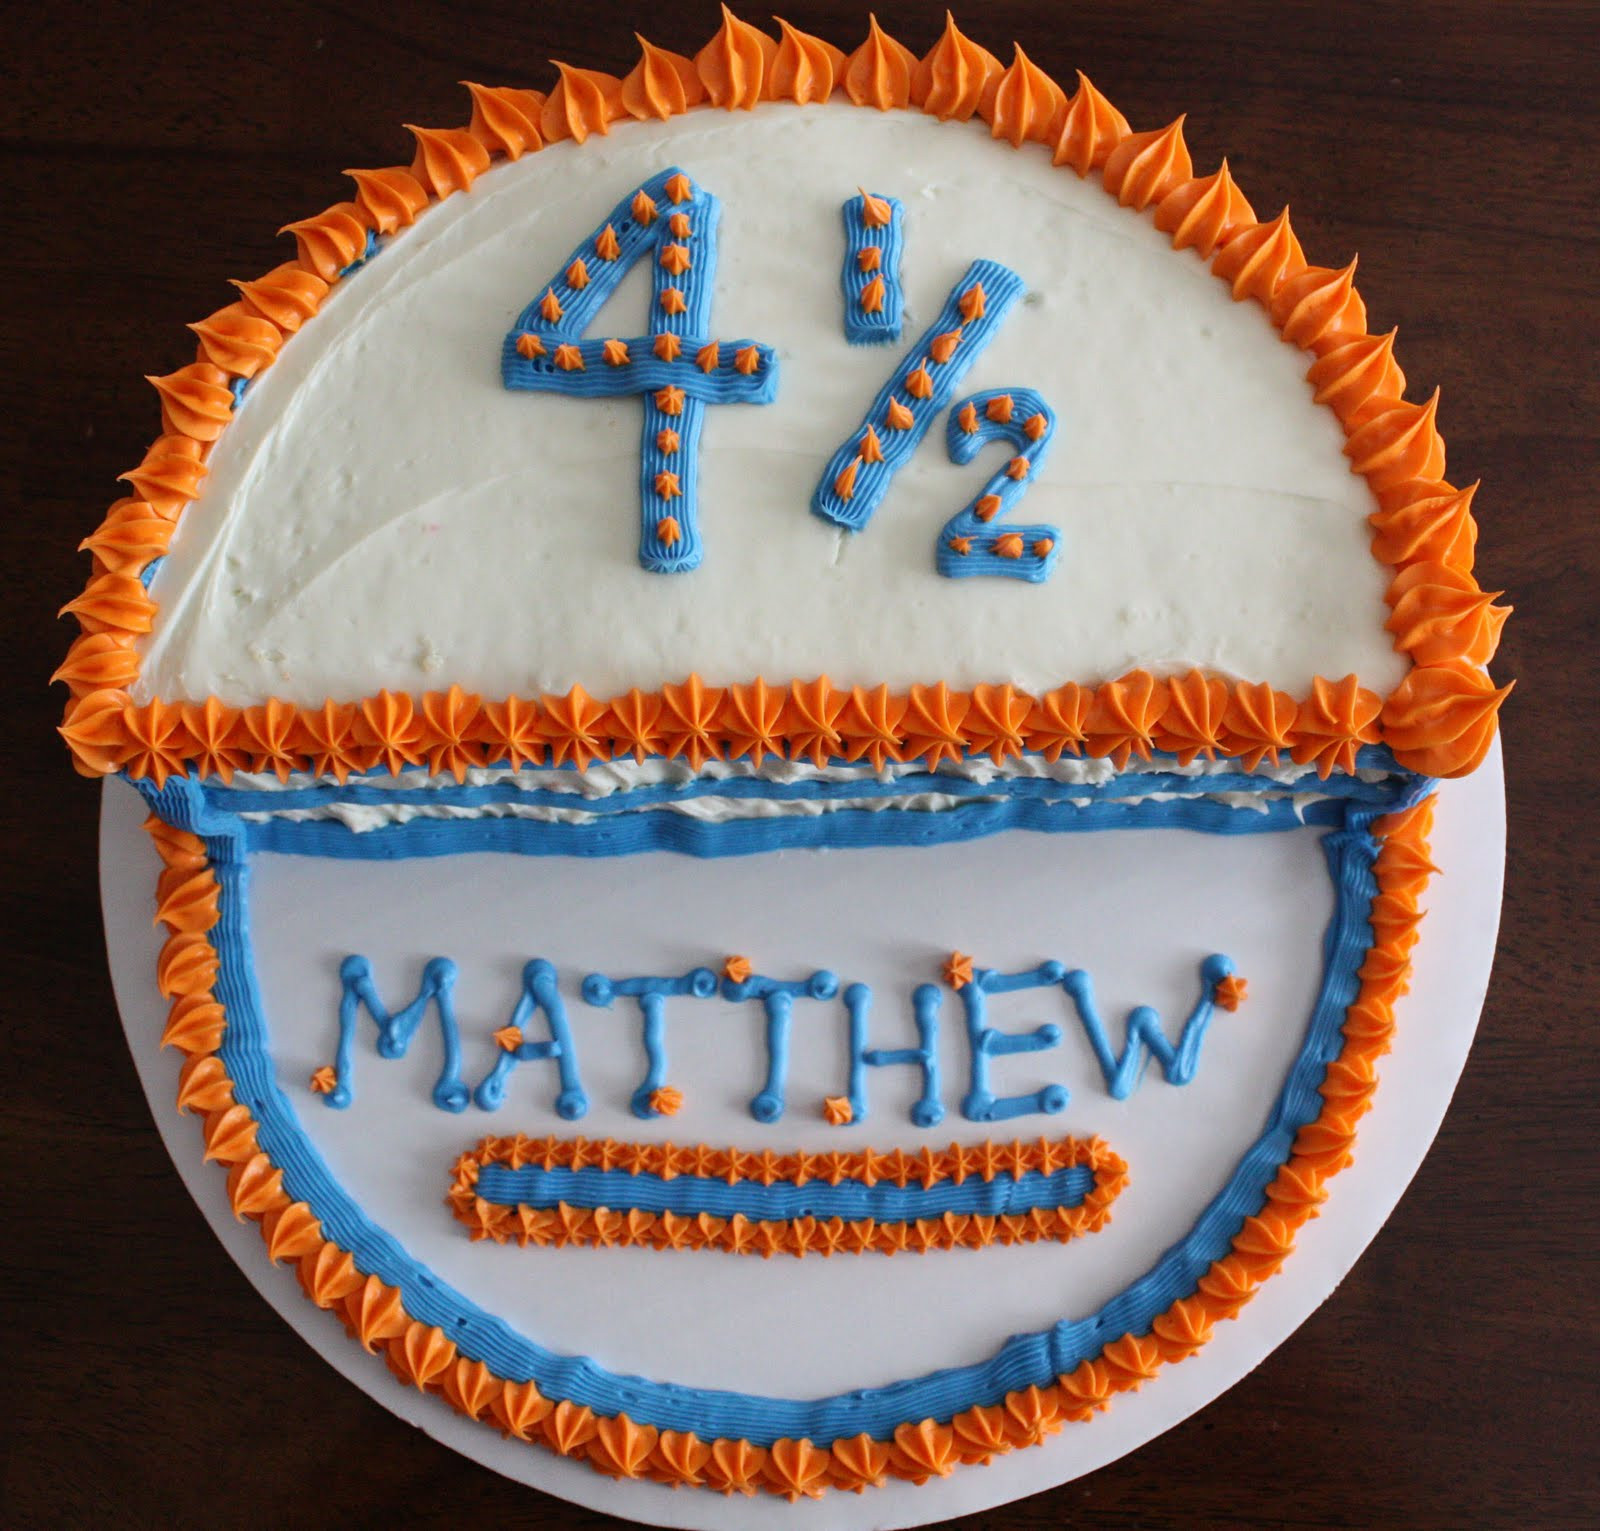 Best ideas about Half Birthday Cake
. Save or Pin Straight to Cake Winner s Cake Half Birthday Now.